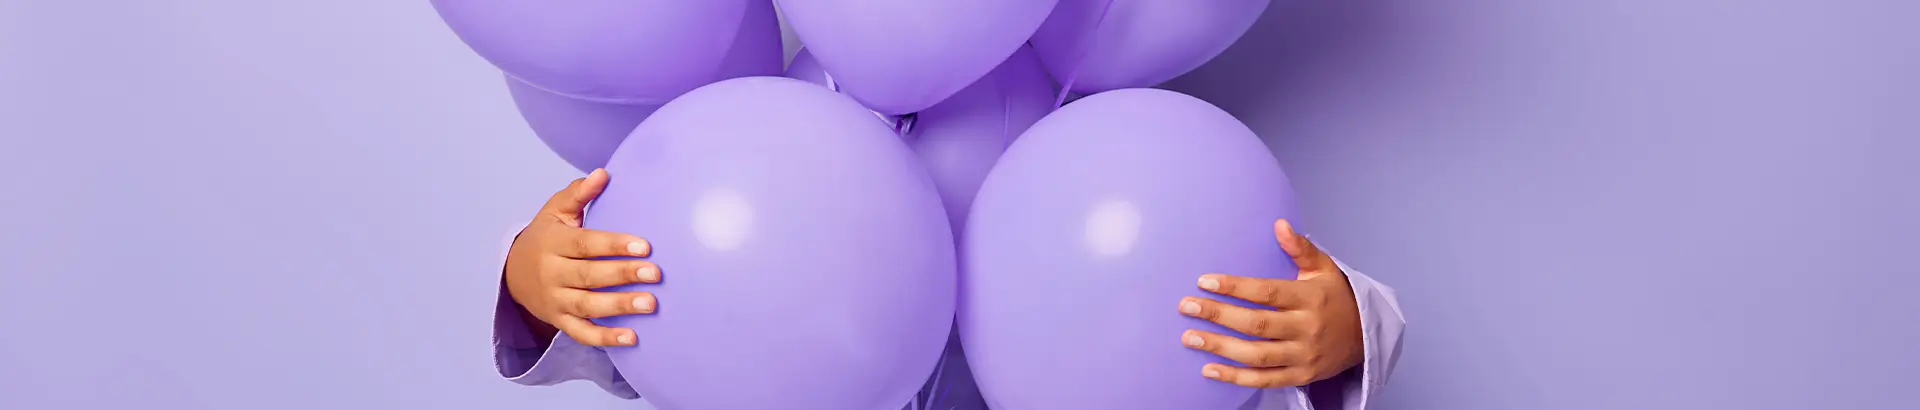 Ballons violets